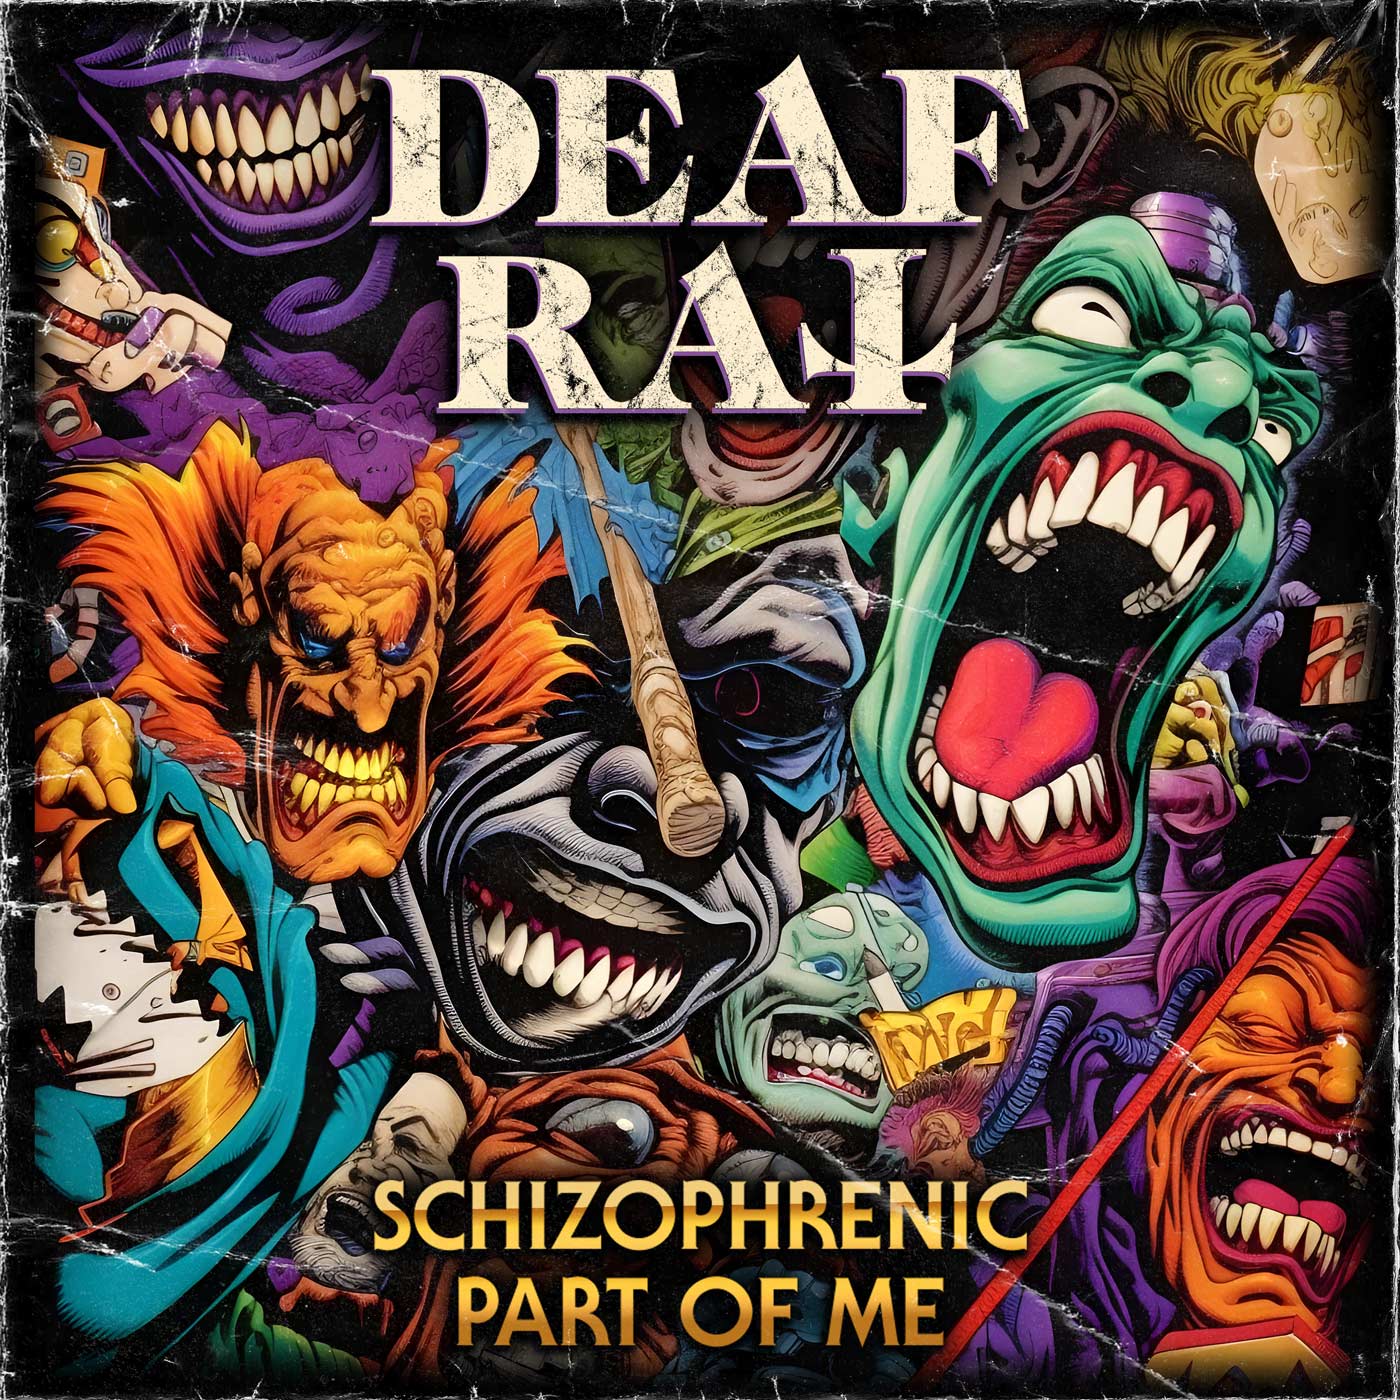 Cover artwork of Deaf Rat single Shizophrenic Part Of Me